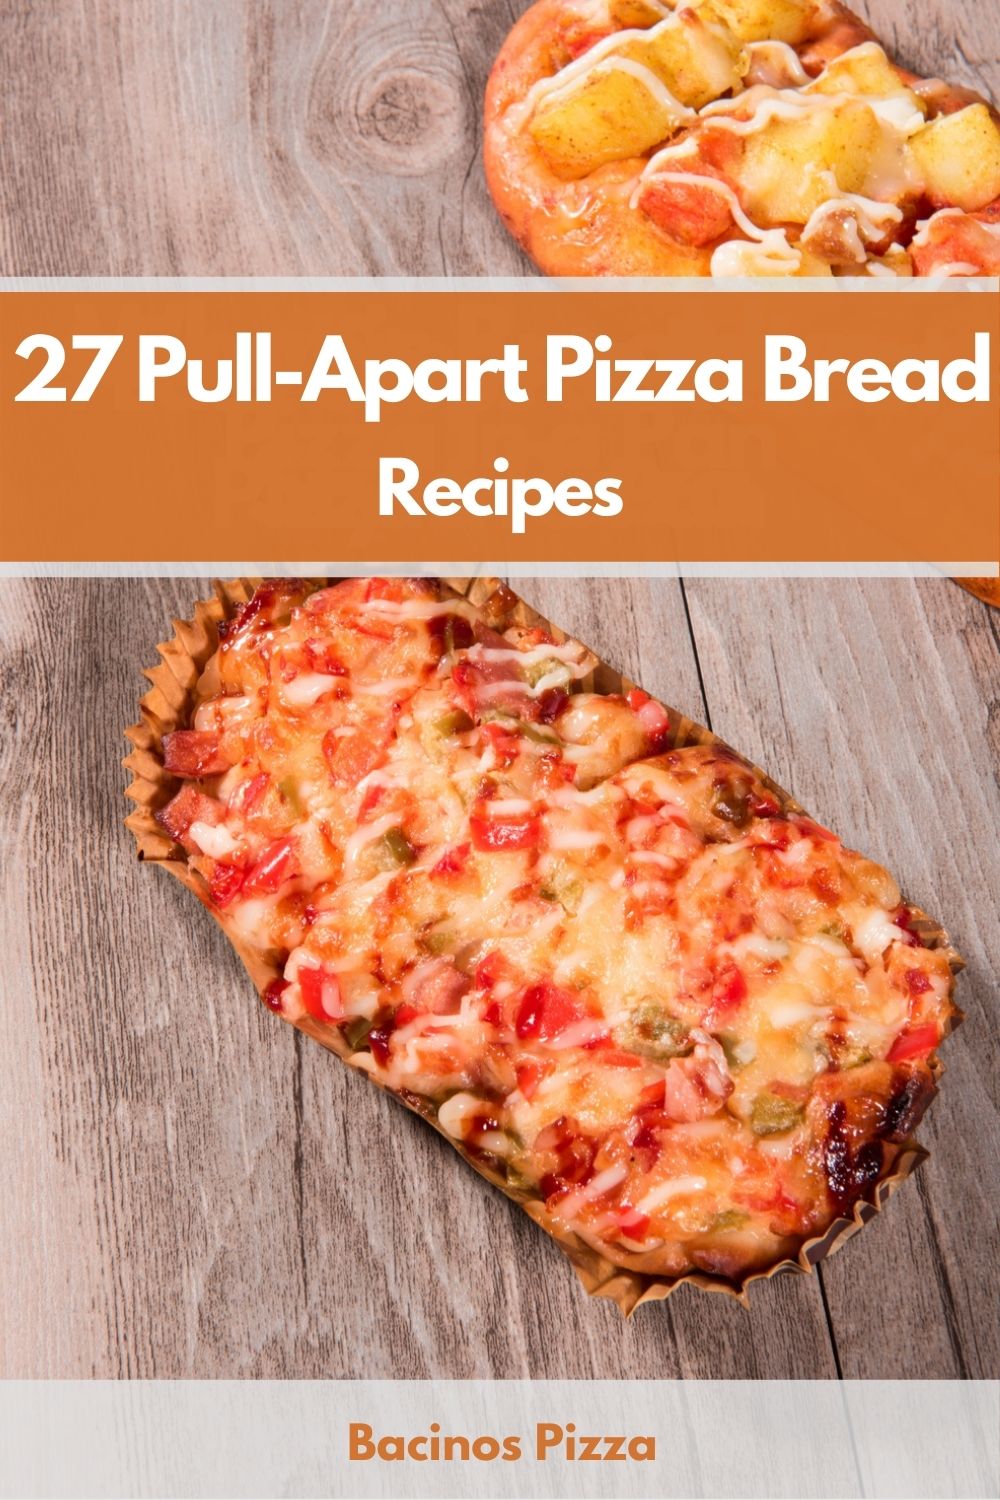 27 Pull-Apart Pizza Bread Recipes pin